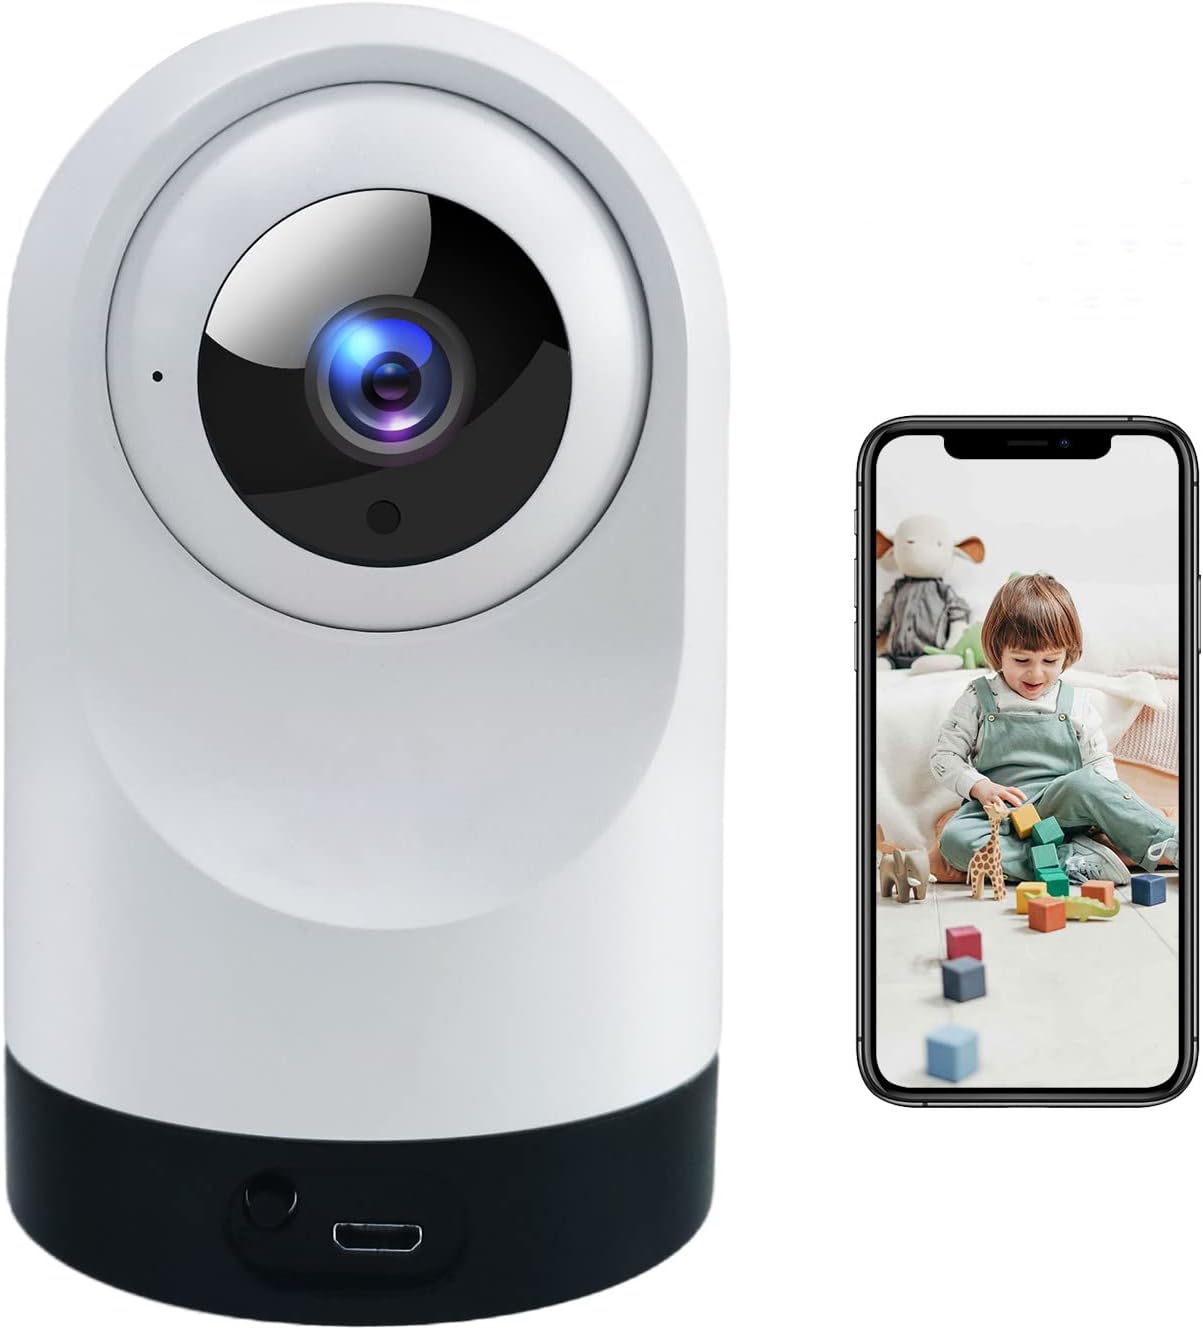 FEBFOXS Baby Monitor Security Camera, Pet Camera Guide How to Set Up